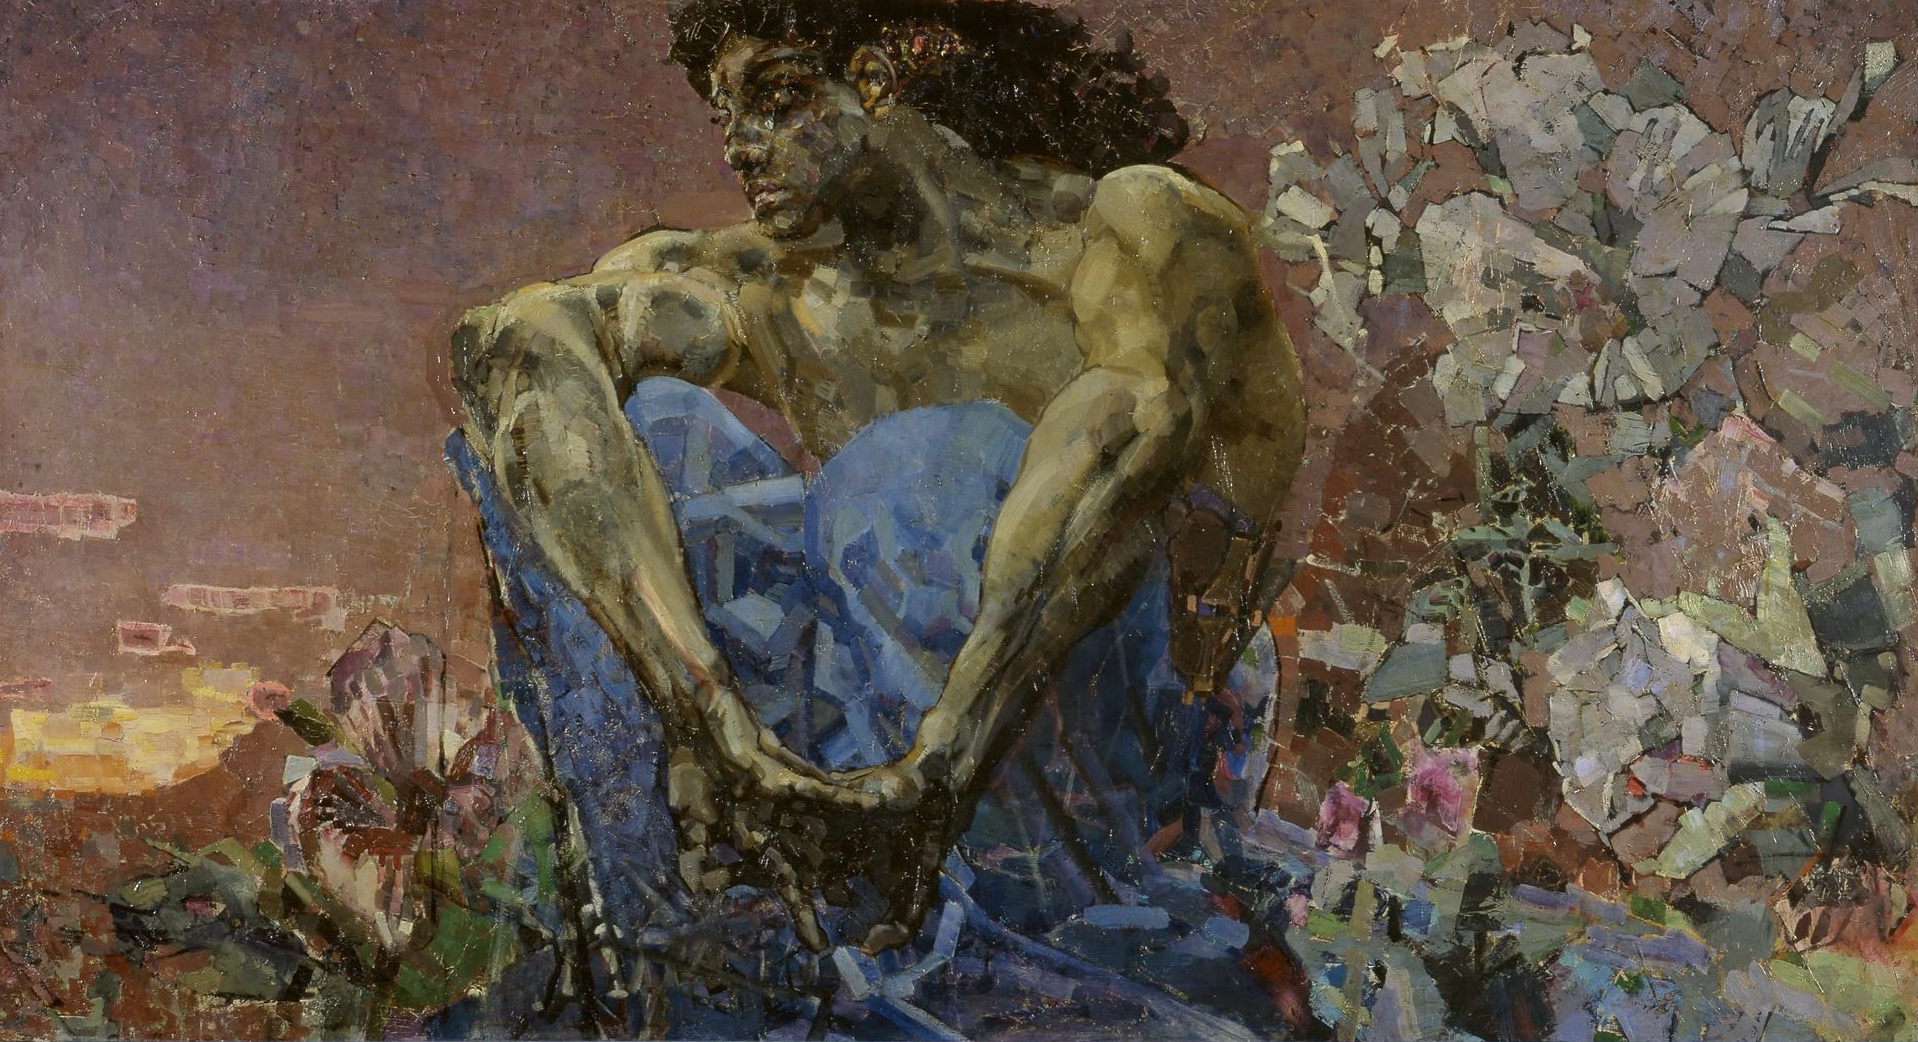 Demon Seated in a Garden by Mikhail Vrubel - 1890 - 114 x 211 cm Tretyakov Gallery